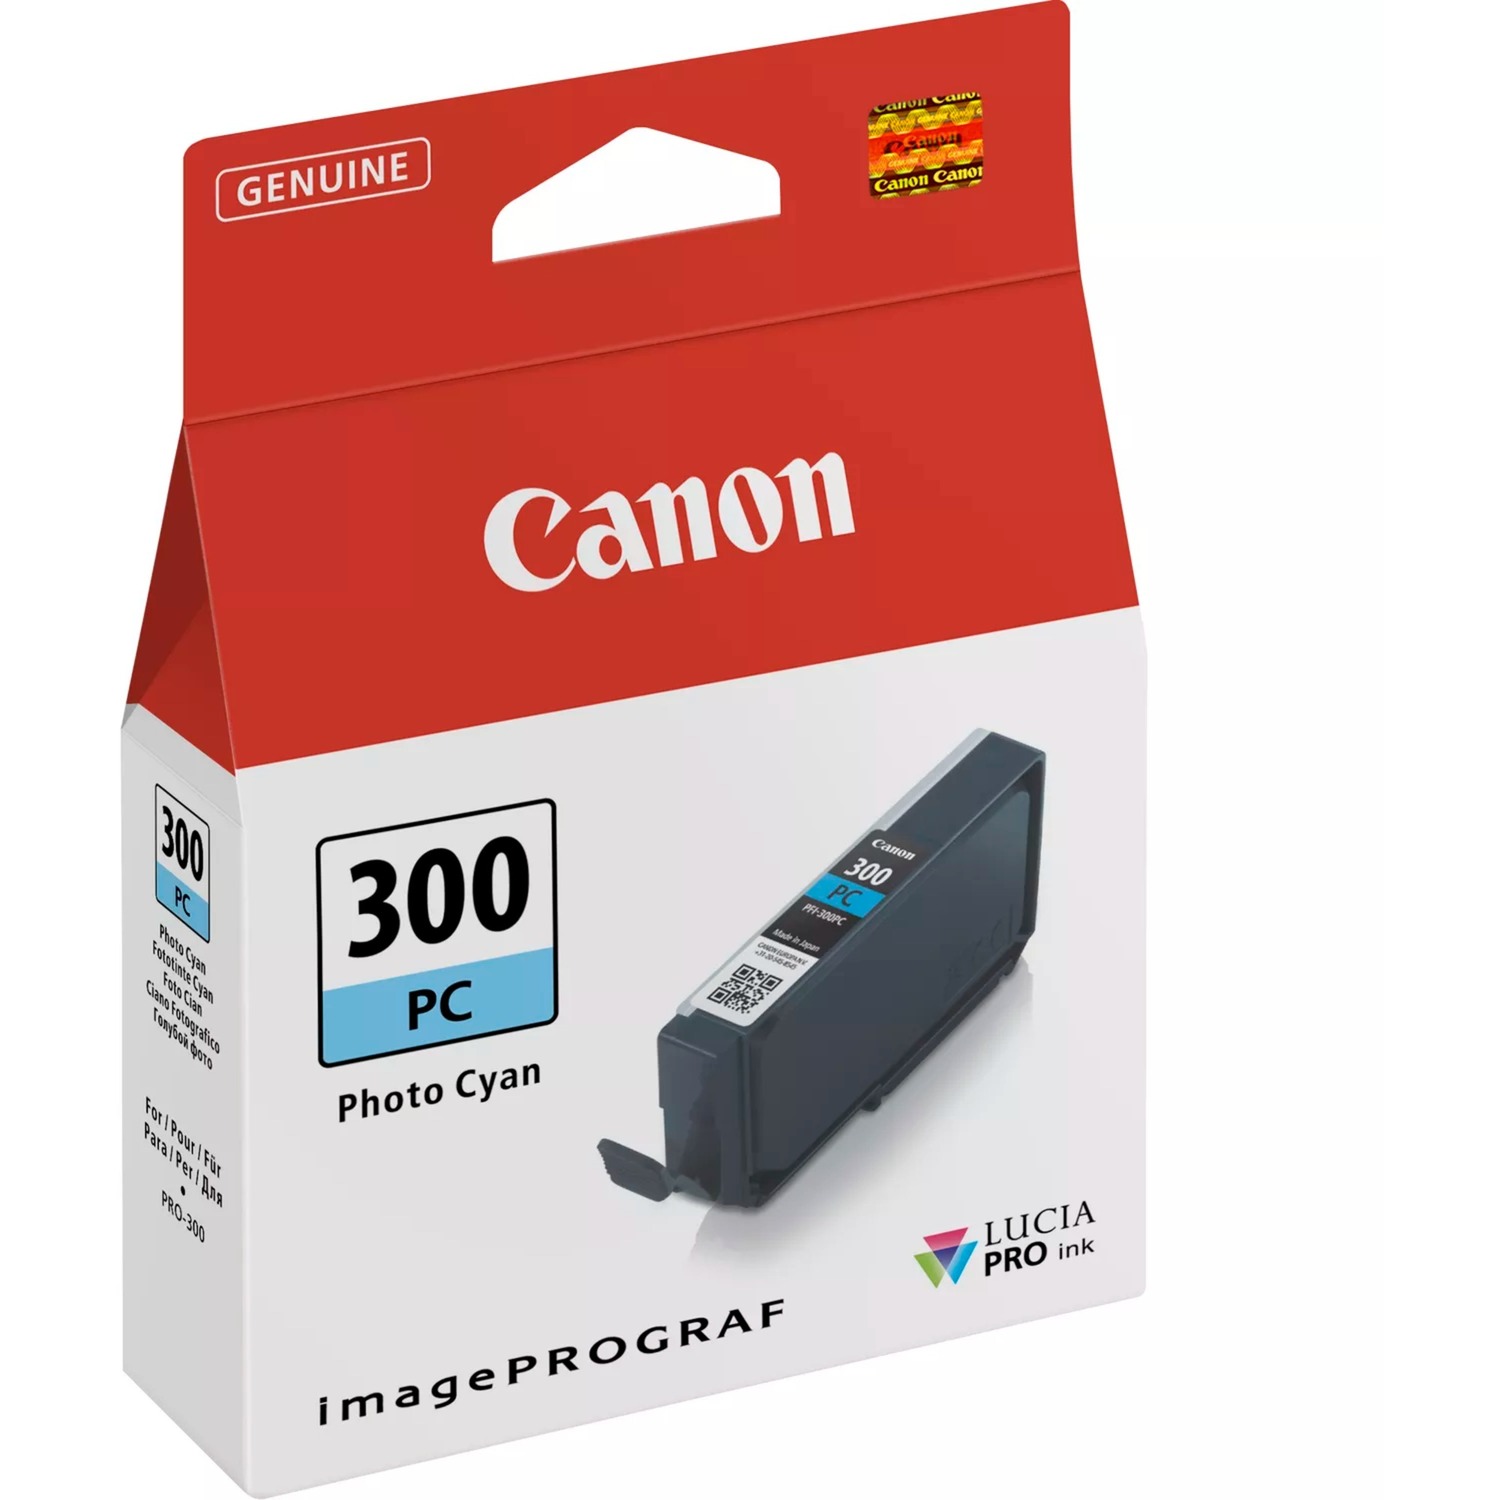 Tinte foto-cyan PFI-300PC (4197C001) von Canon